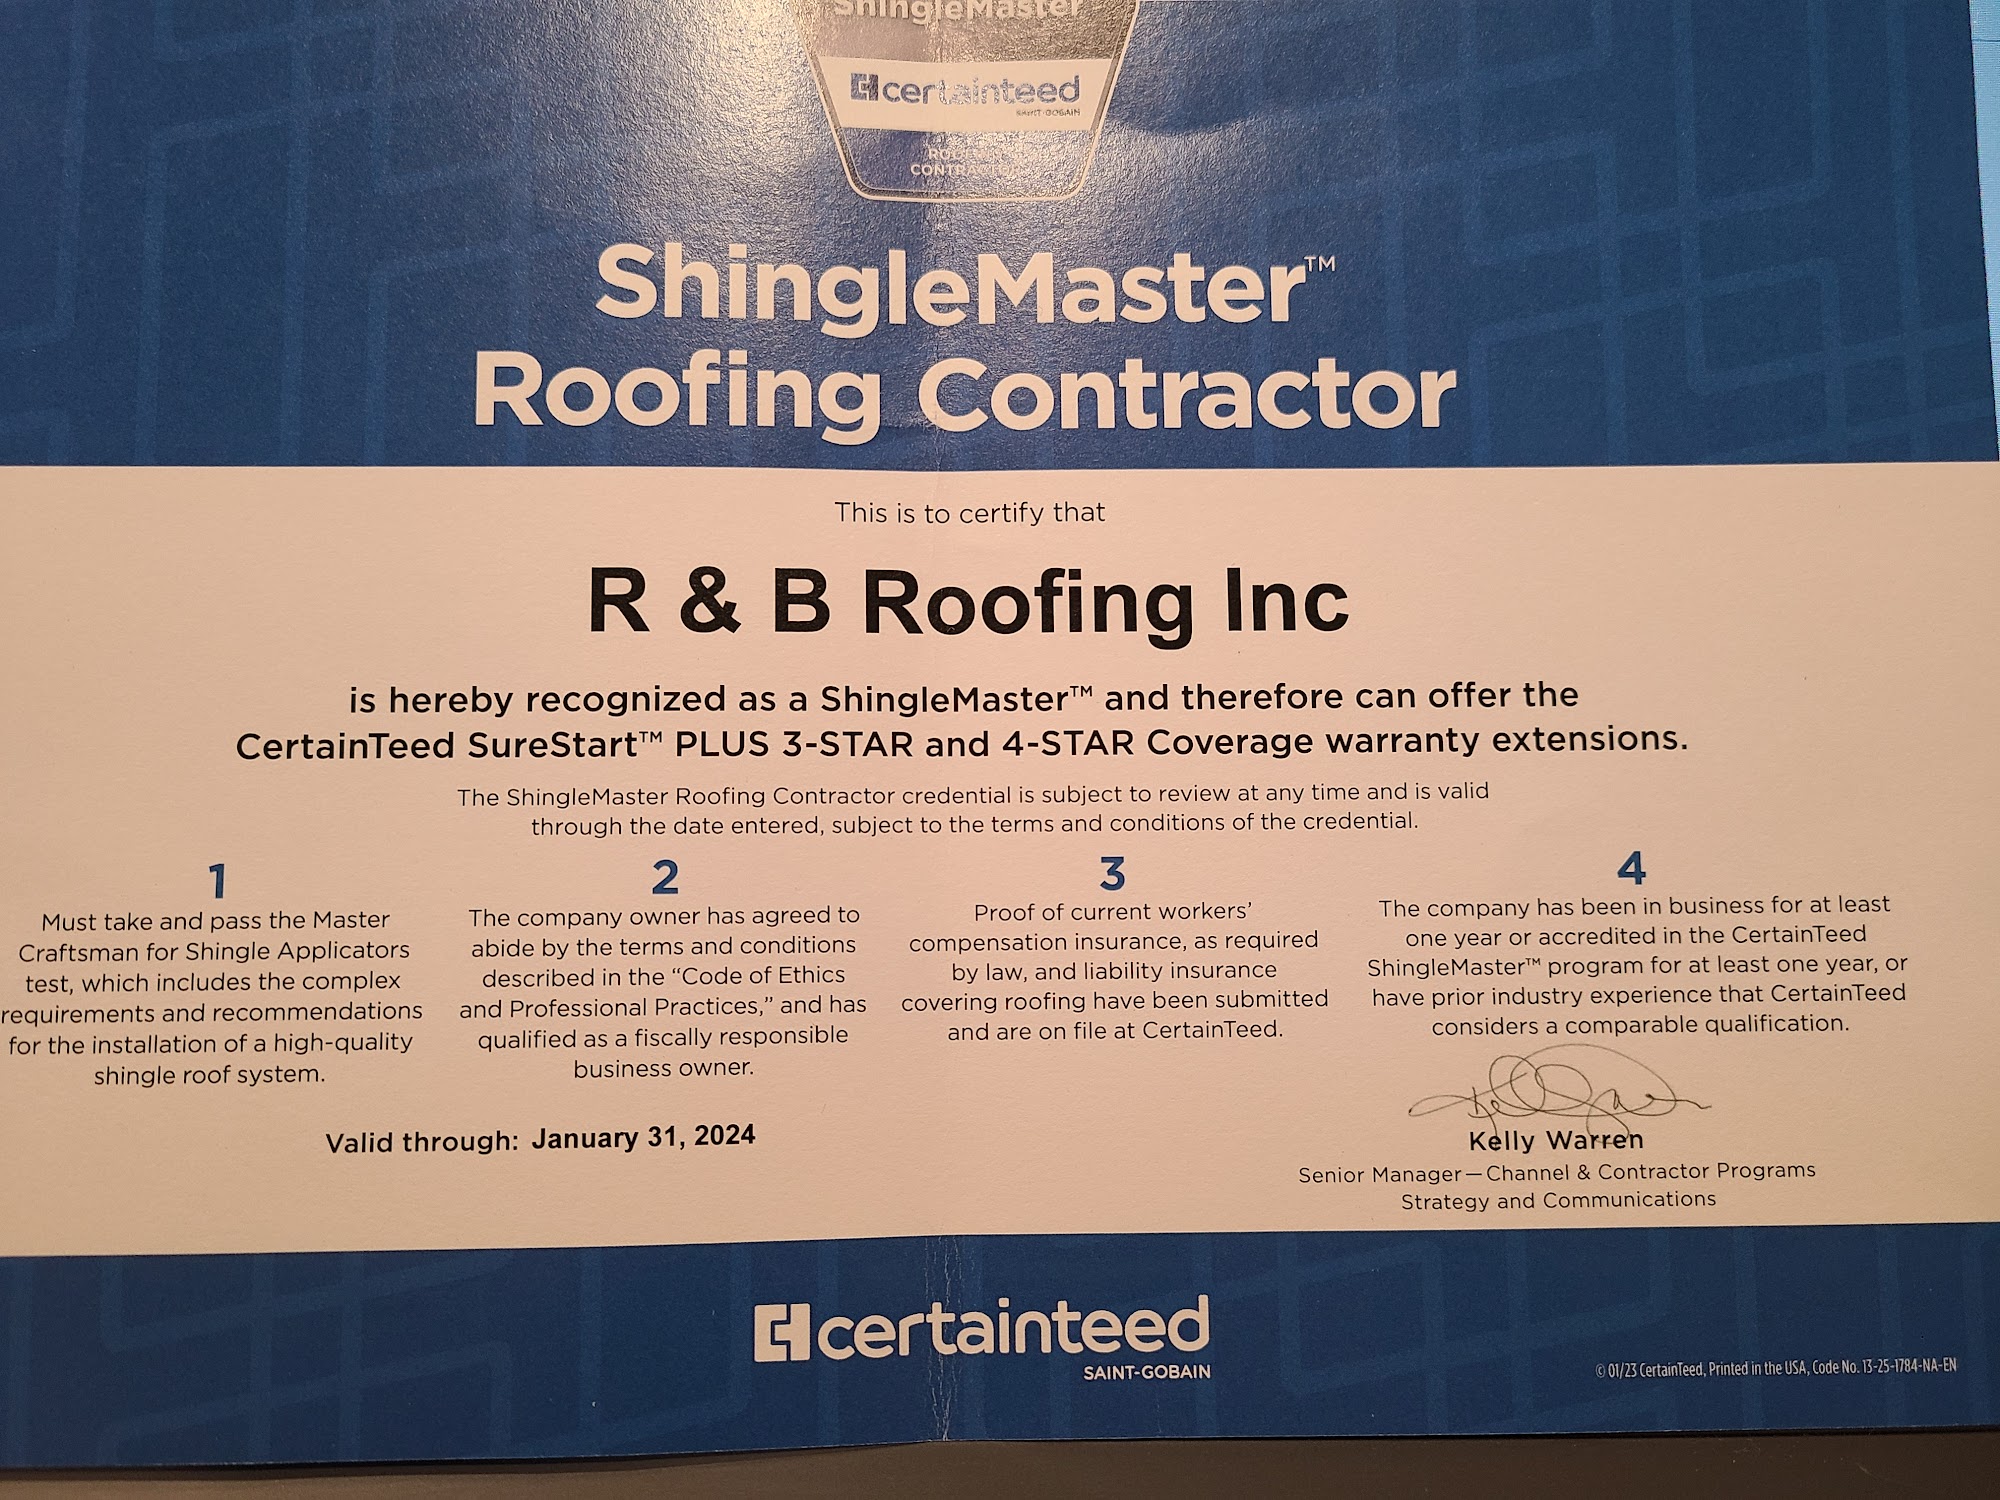 R&B Roofing, Inc N1855 Manley Rd, Hortonville Wisconsin 54944